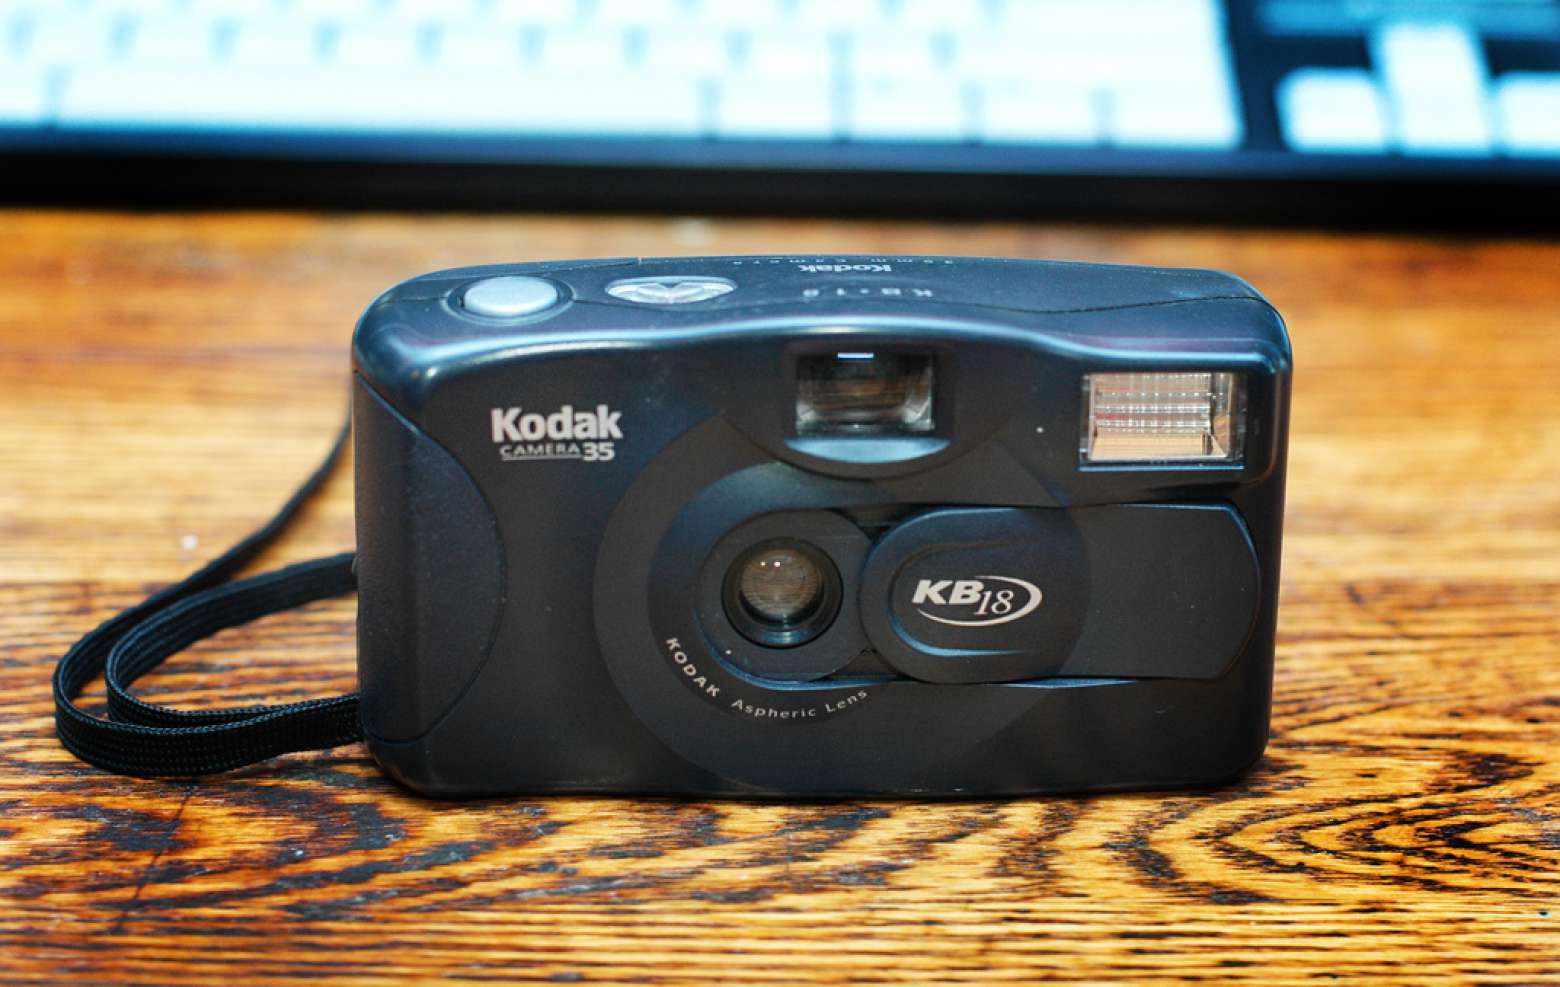 Photo of KODAK KB18 Camera